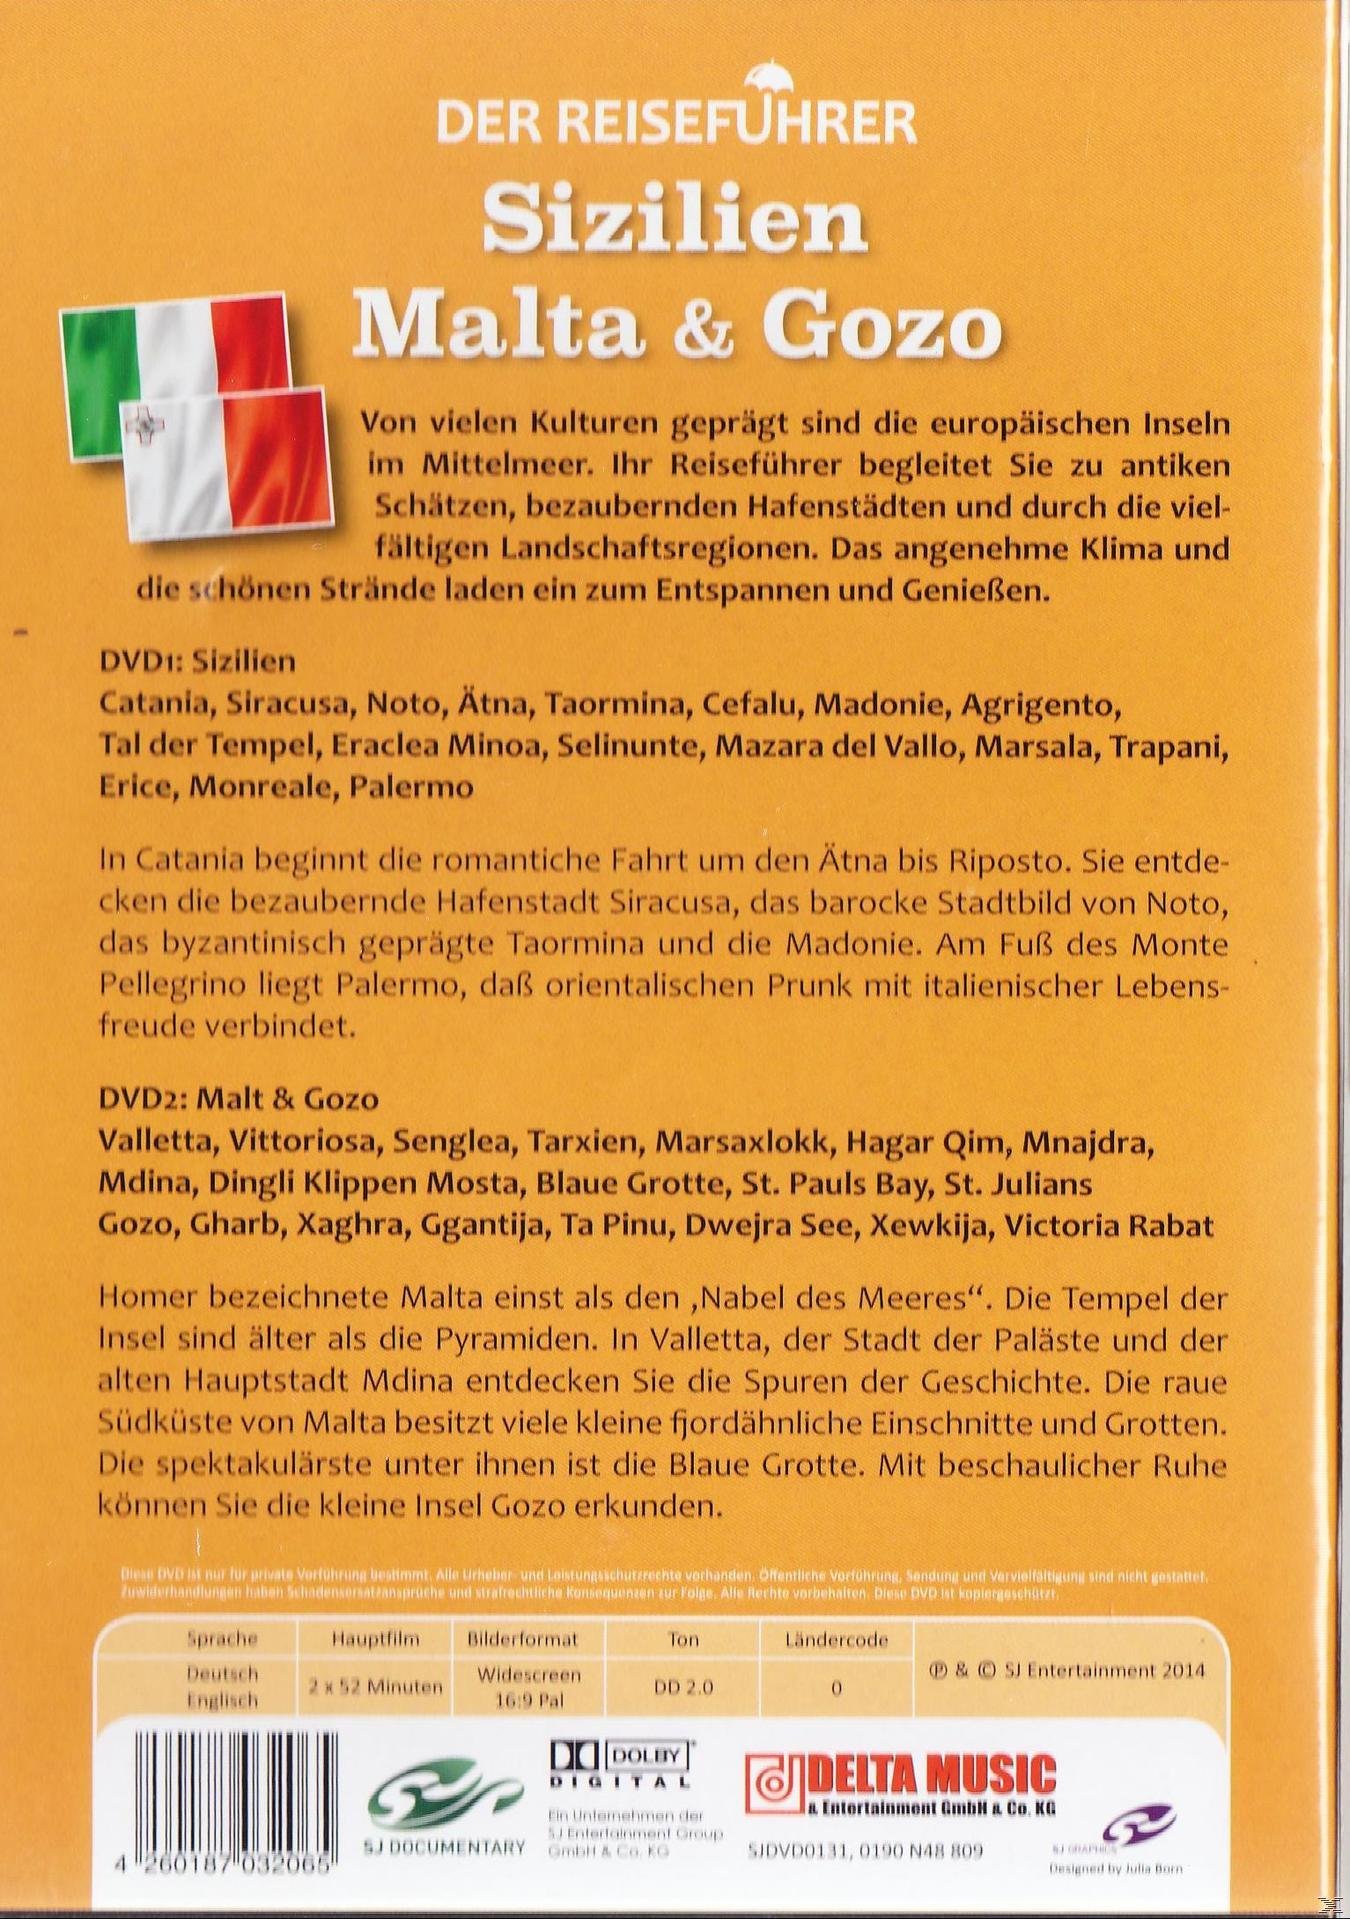 Der Reiseführer - Sizilien, Malta & Gozo DVD